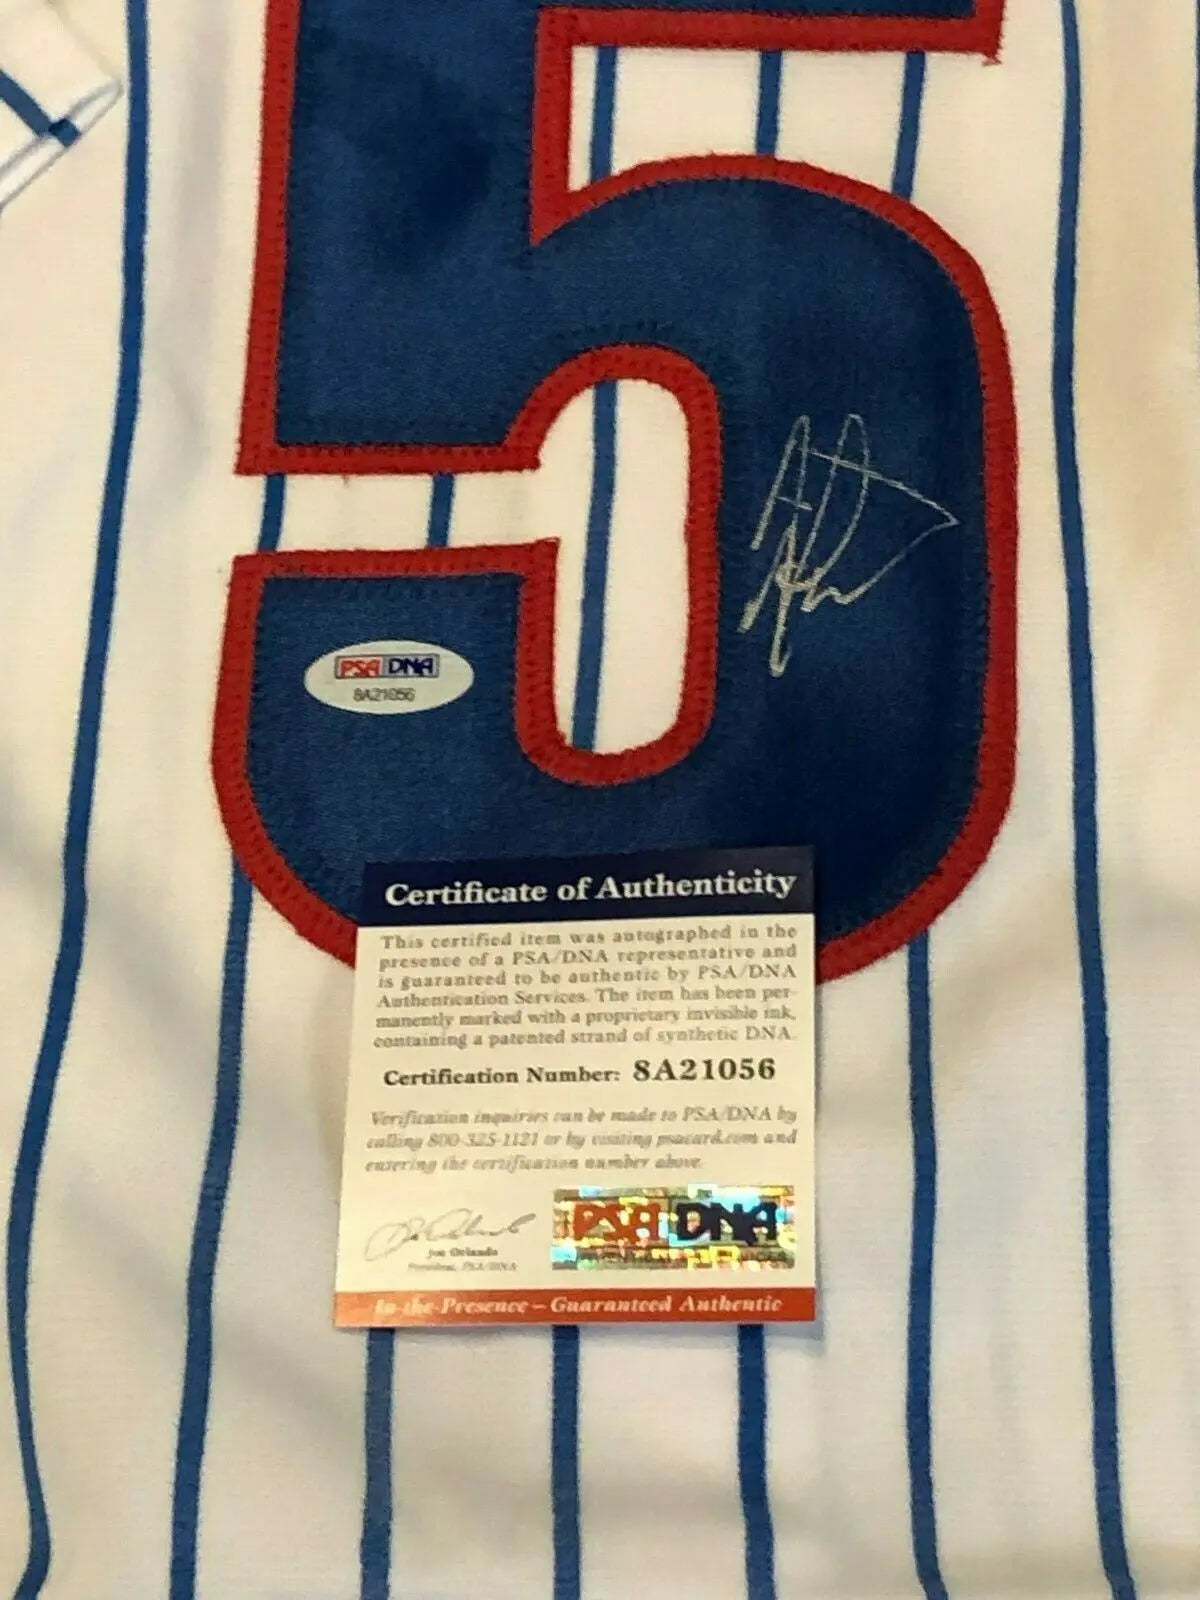 Chicago Cubs Albert Almora Jr. Autographed Signed Jersey Psa Coa – MVP  Authentics